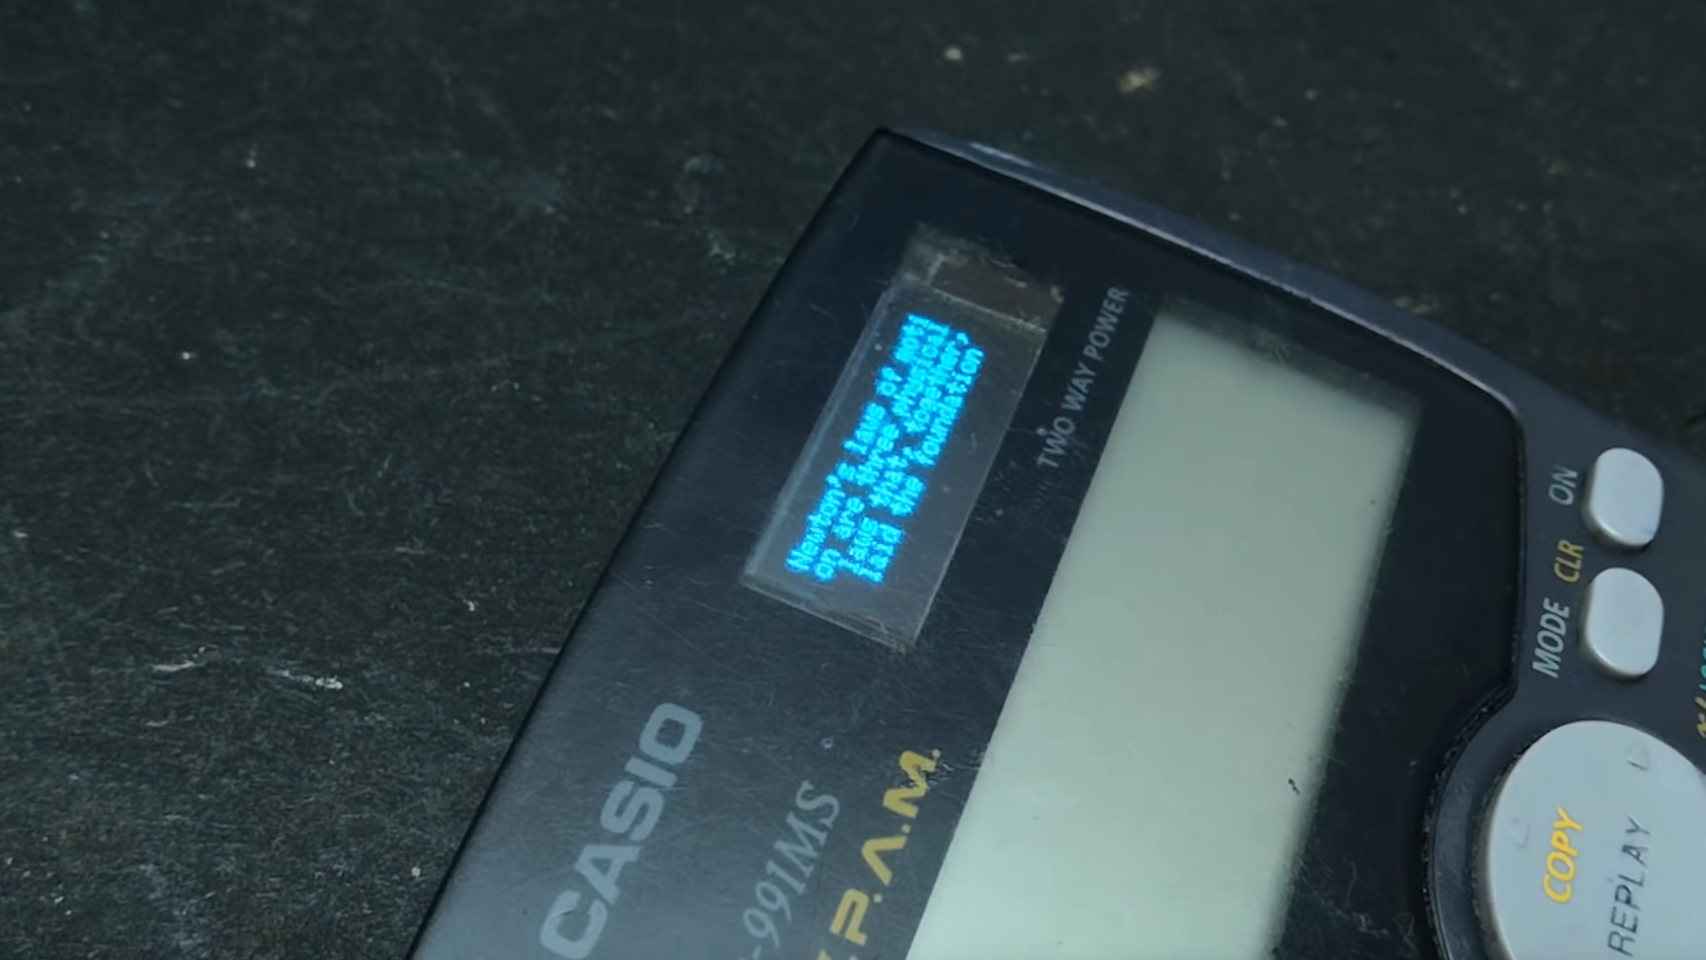 La pantalla OLED instalada en la calculadora permite leer textos